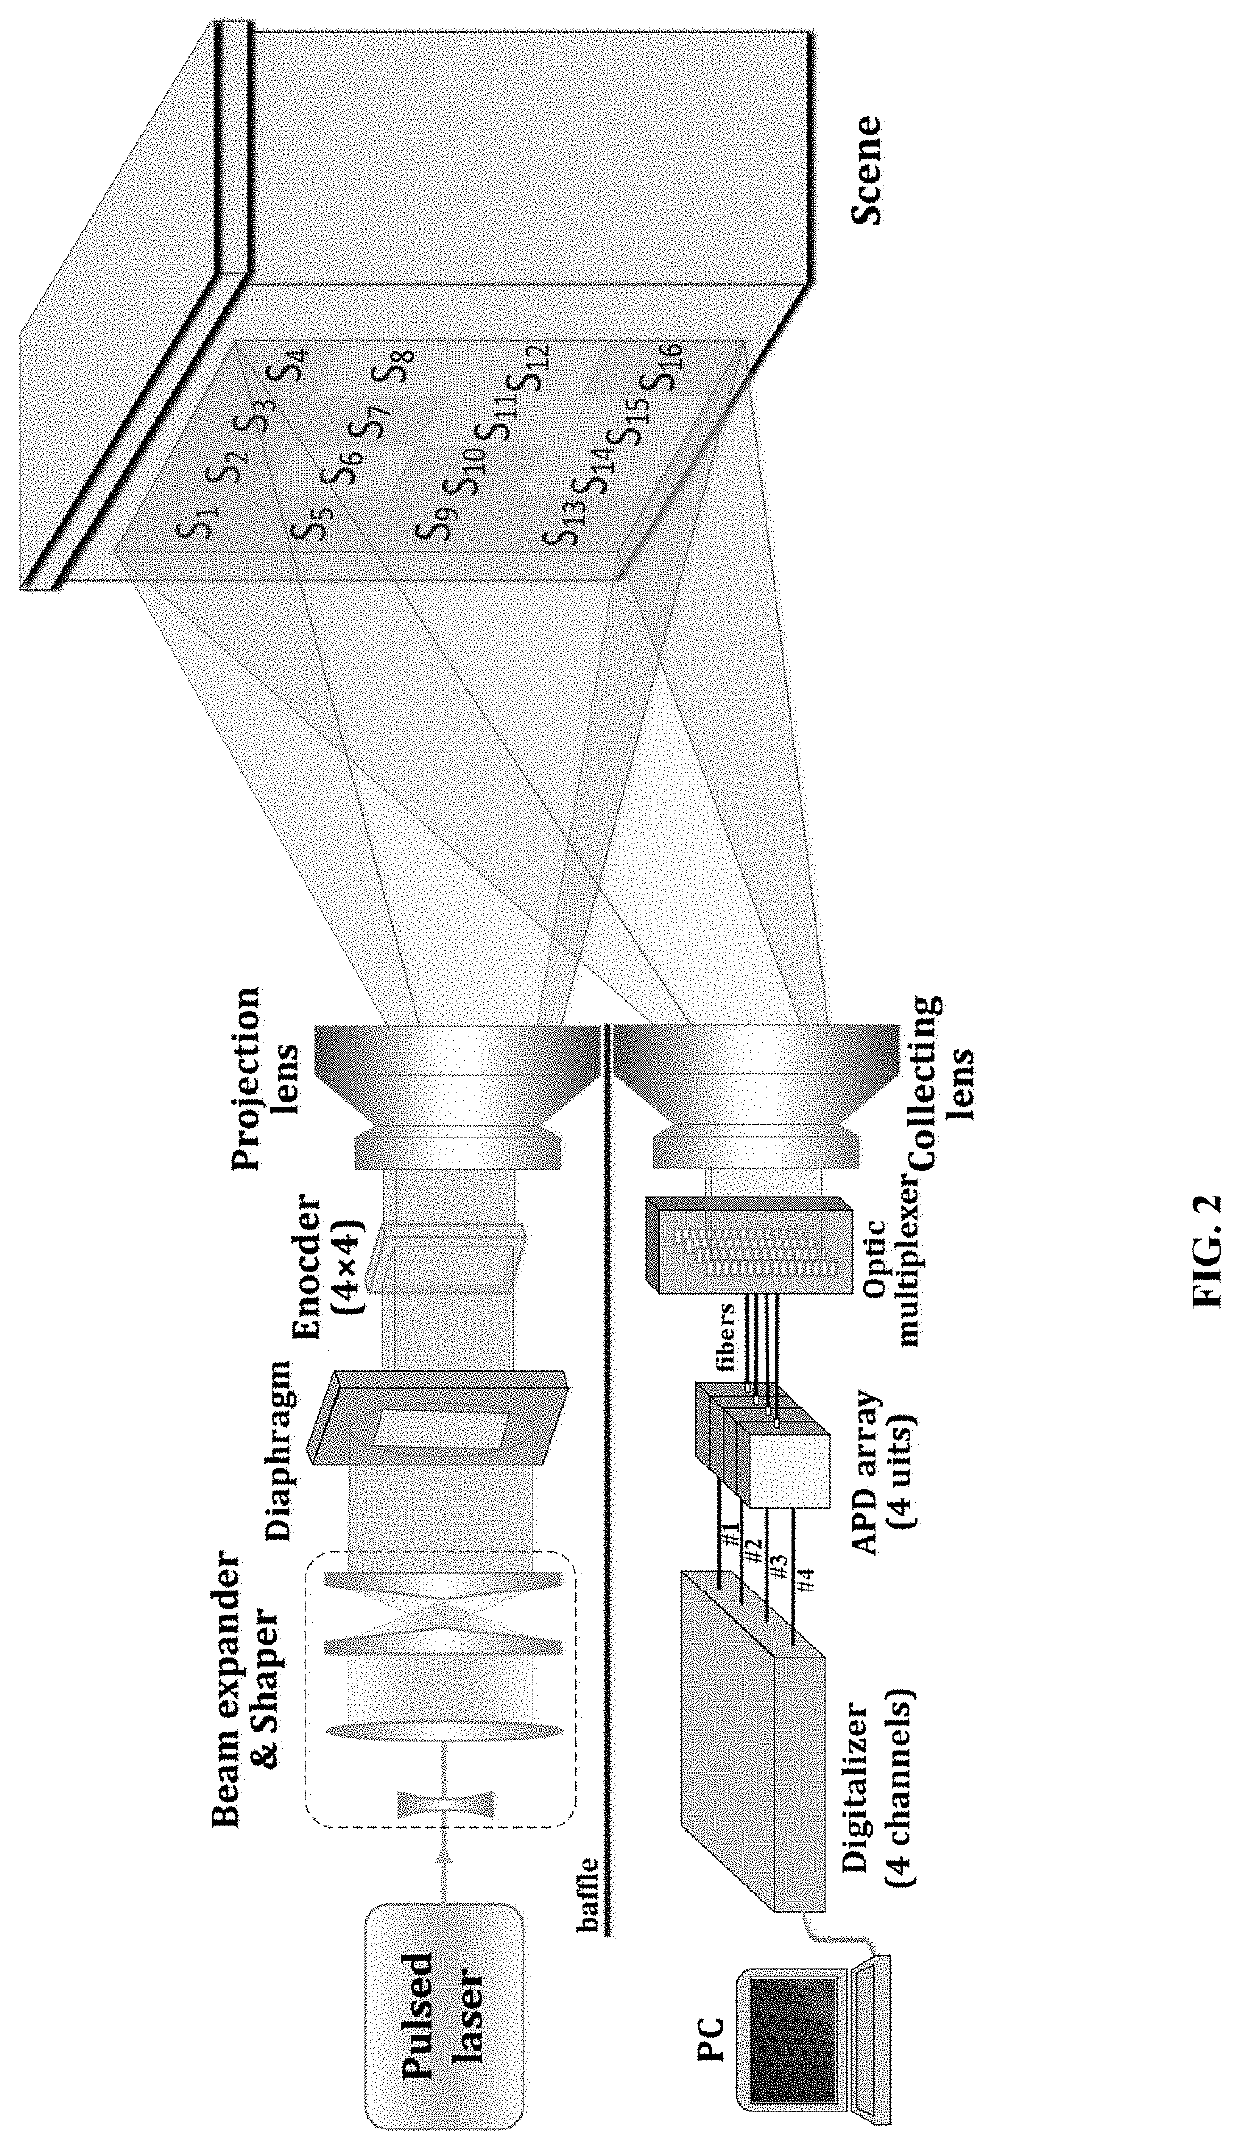 CDMA-based 3D imaging method for focal plane array LIDAR